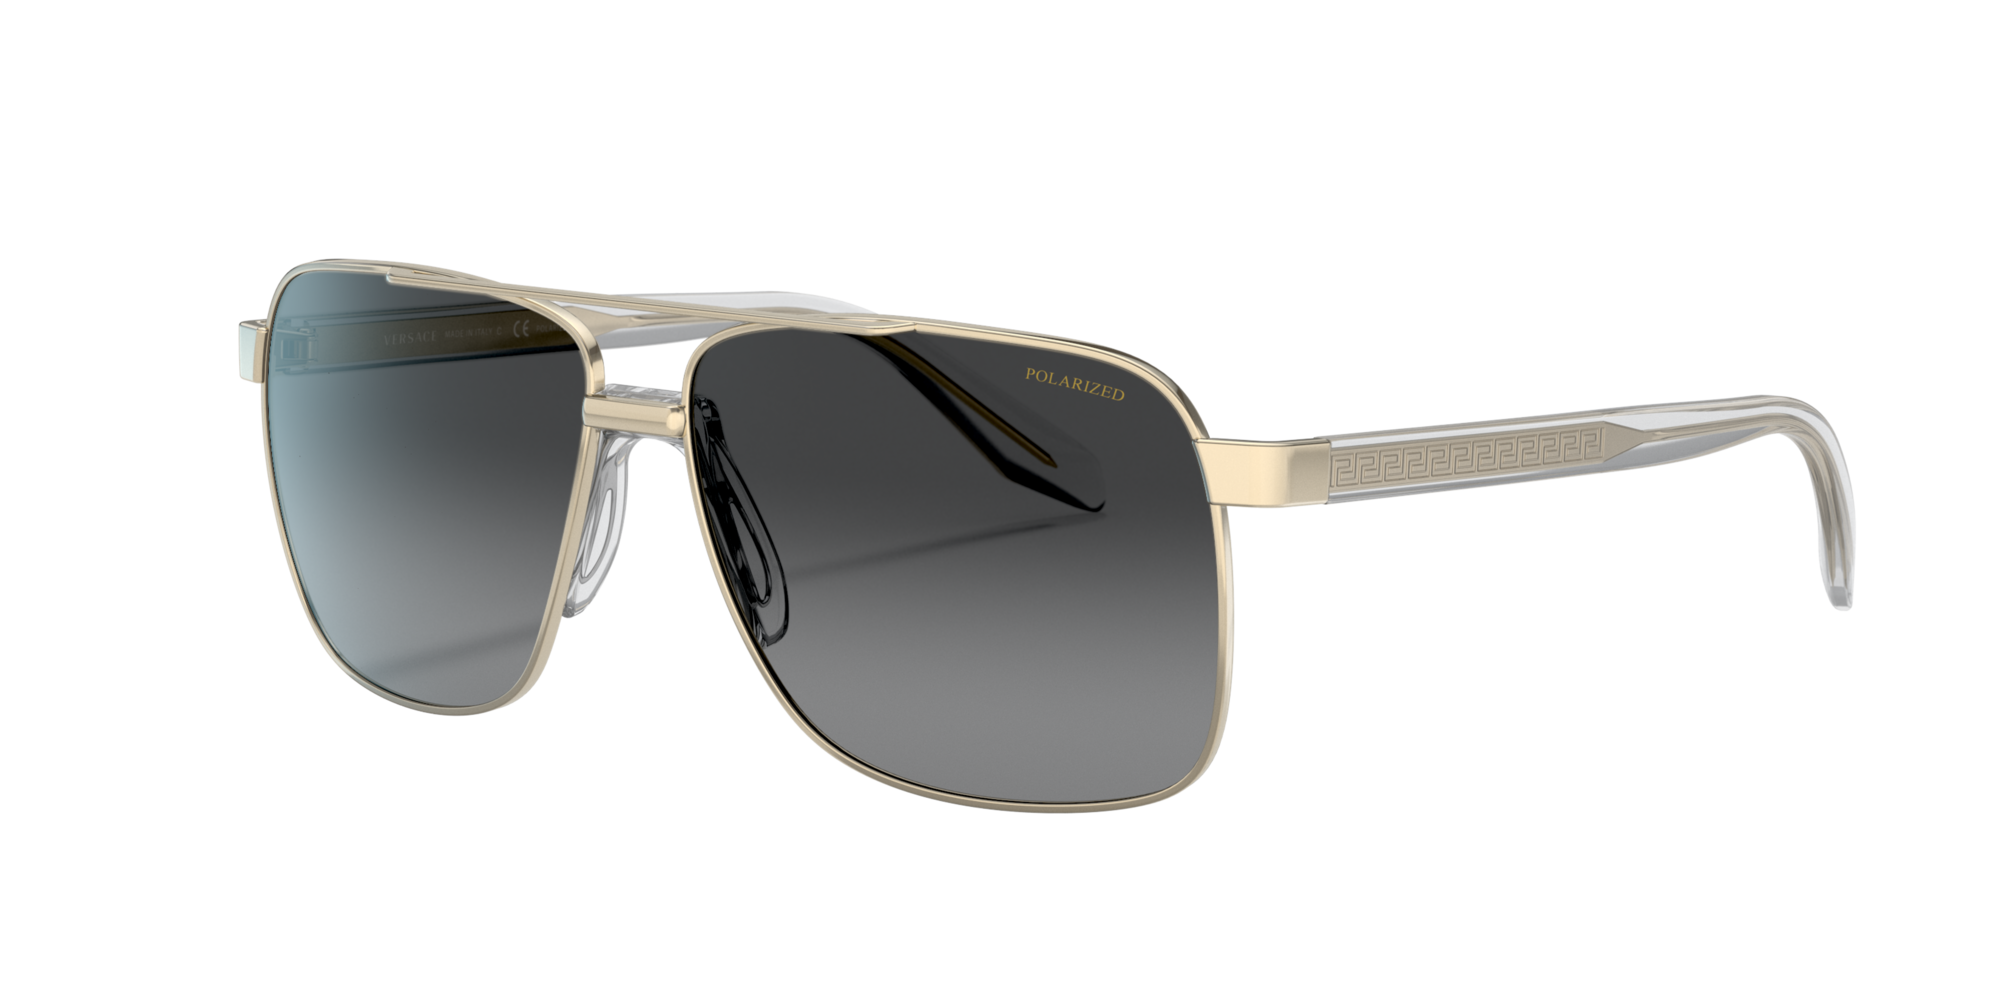 mens versace sunglasses 2019